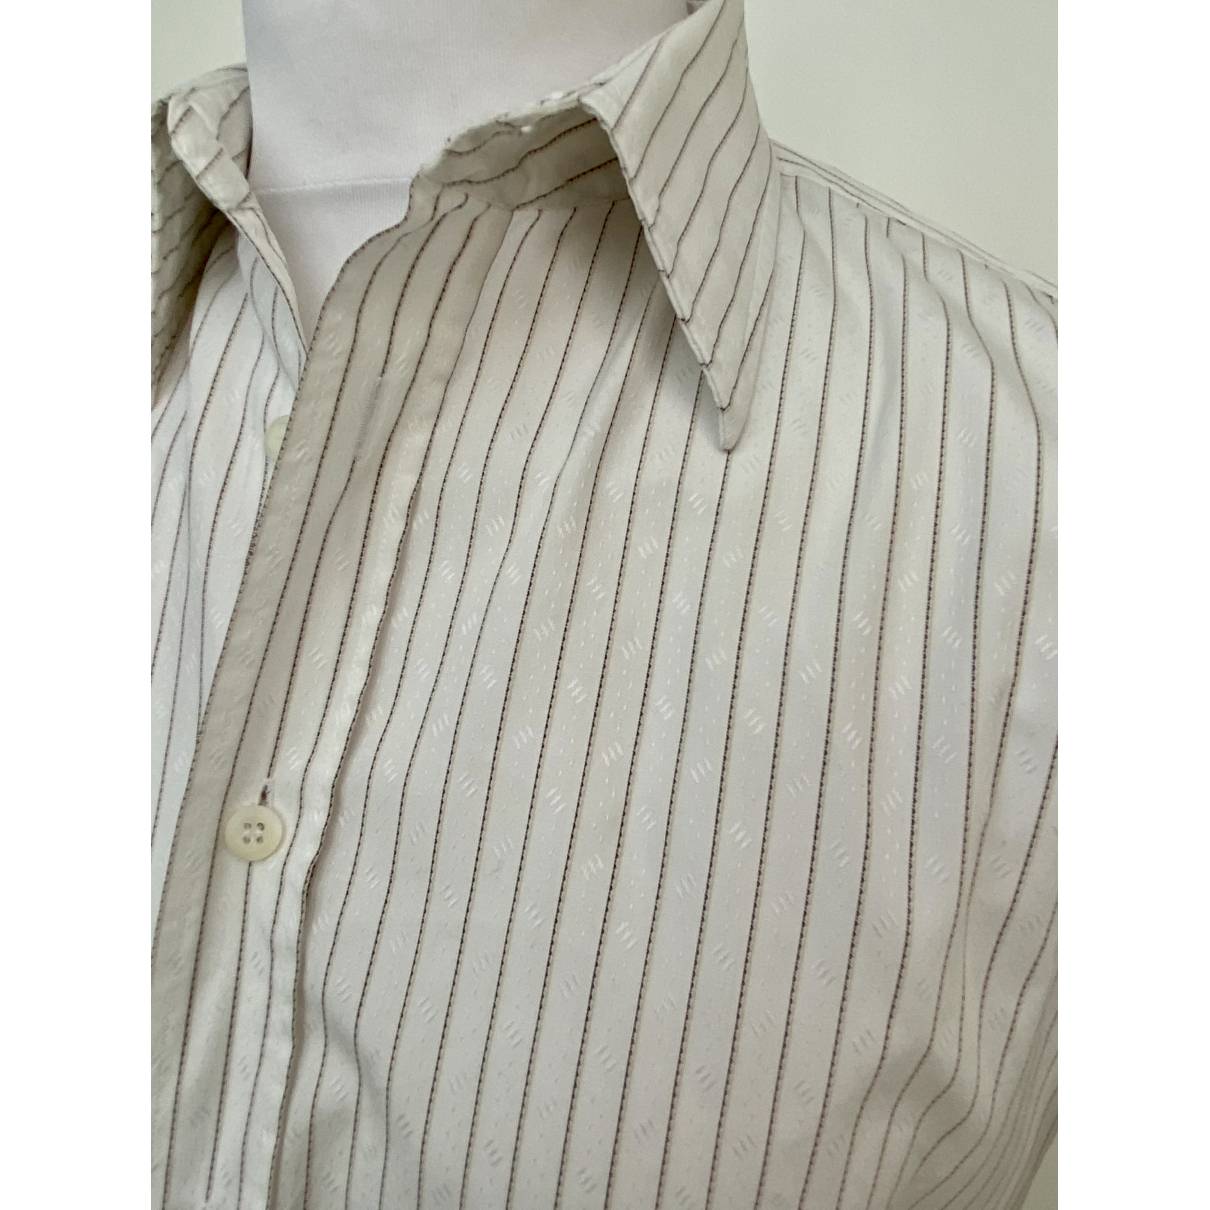 gastos generales Dólar menor Camisas Prada Blanco talla 43 EU (tour de cou / collar) de en Algodón -  26235645